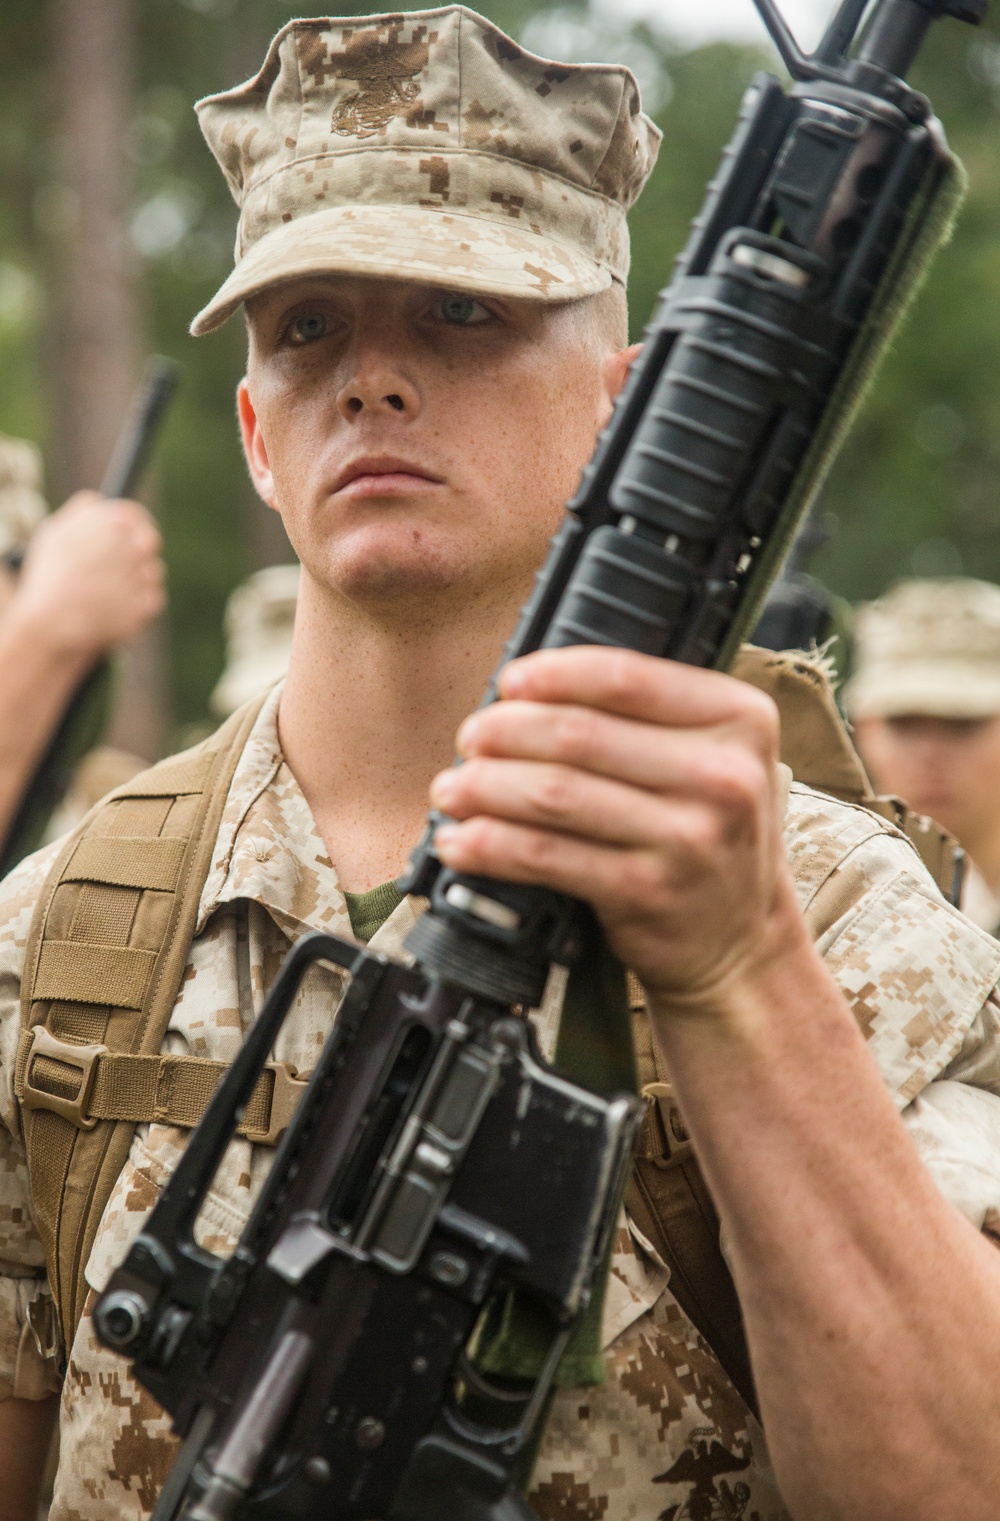 Auburndale, Fla., native training at Parris Island to become U.S. Marine